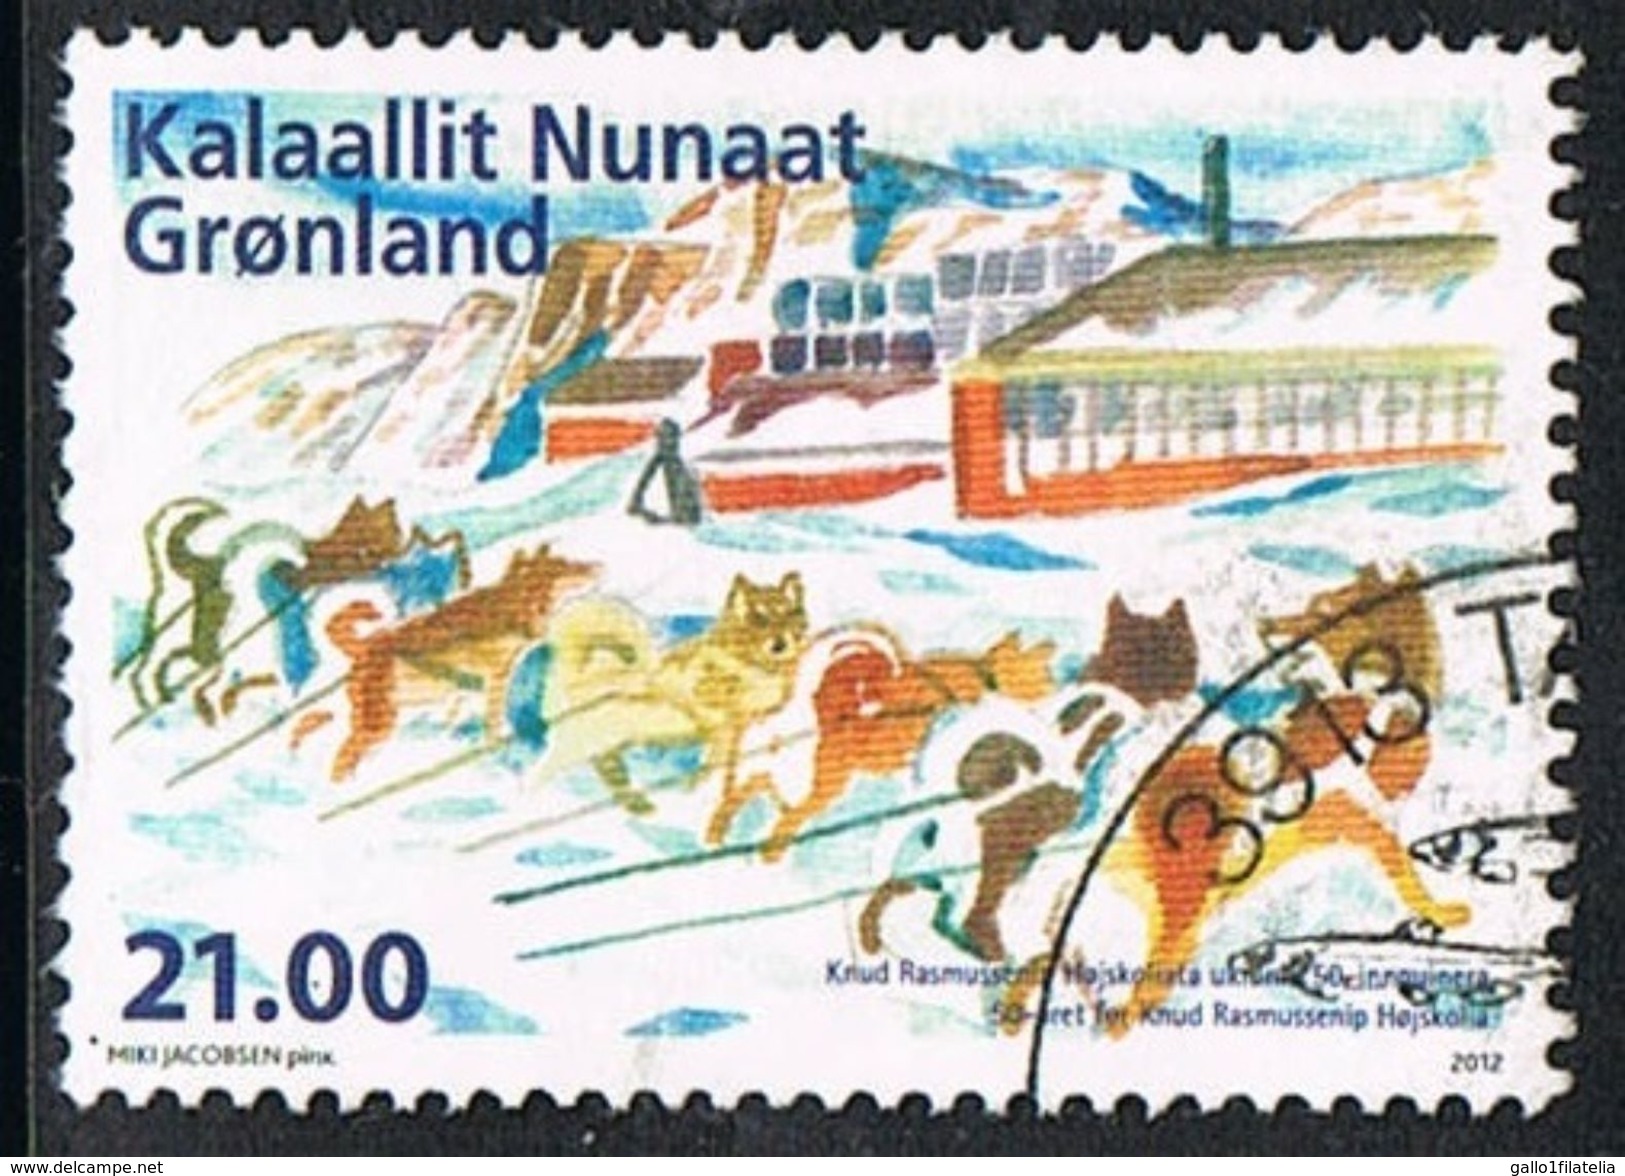 2012 - GROENLANDIA / GREENLAND - SPEDIZIONI DI KNUD RASMUSSEN - USATO / USED. - Used Stamps